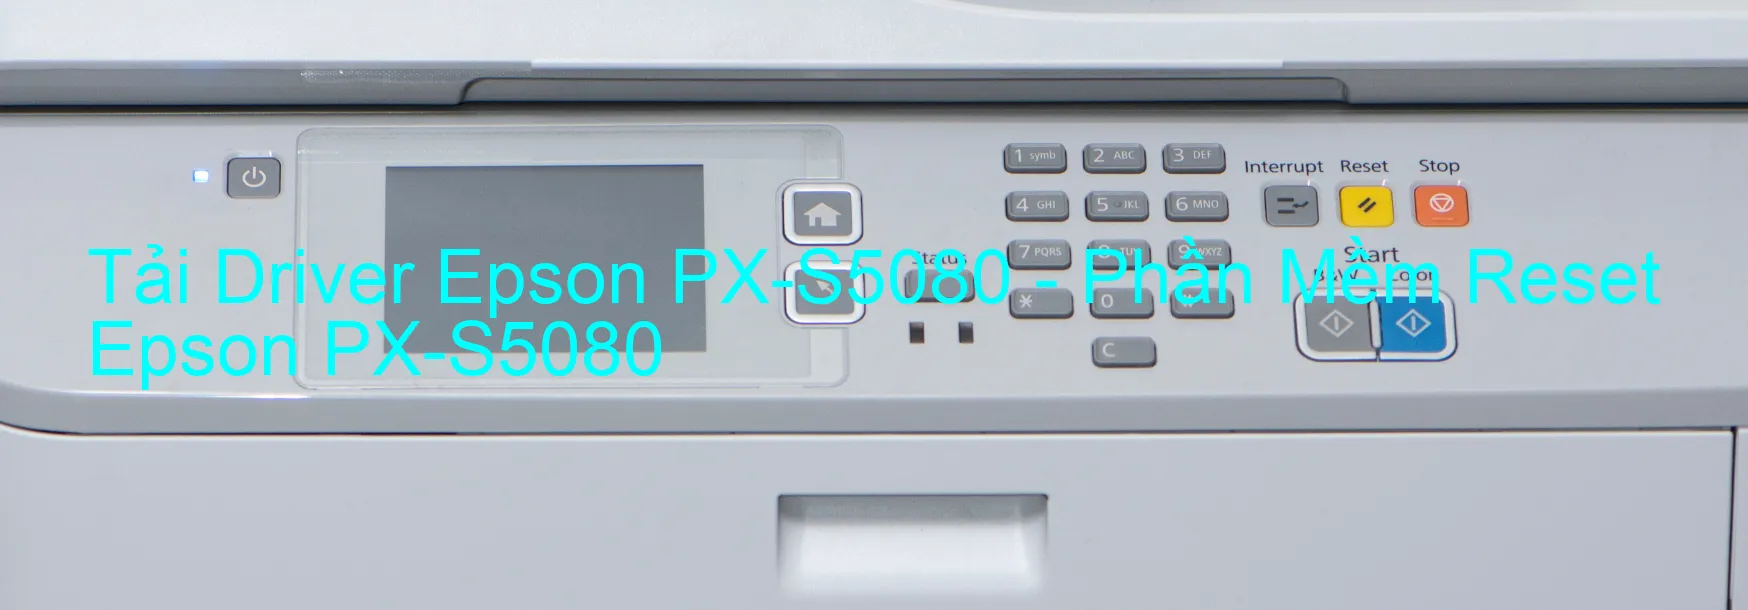 Driver Epson PX-S5080, Phần Mềm Reset Epson PX-S5080